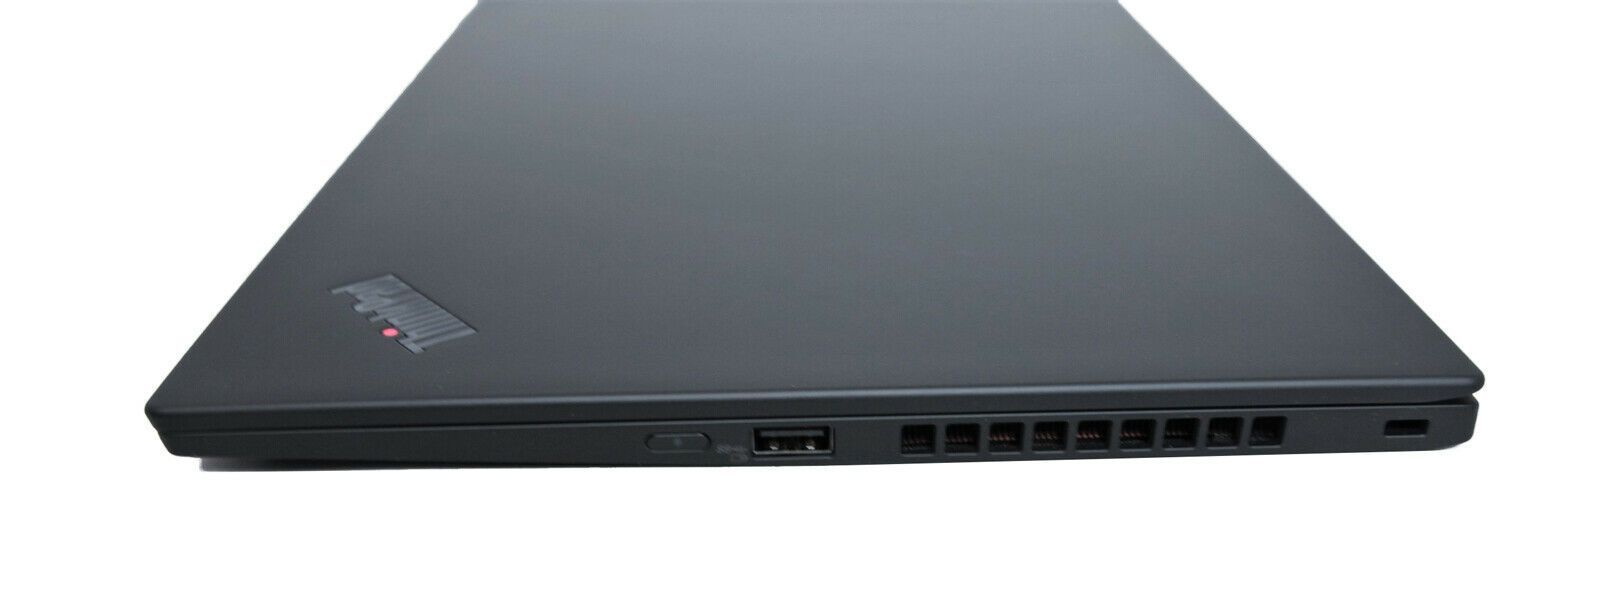 Lenovo Thinkpad X1 Carbon 7th Gen (2019): Core i7-8656U, 256GB, 16GB RAM, Warranty, VAT - CruiseTech